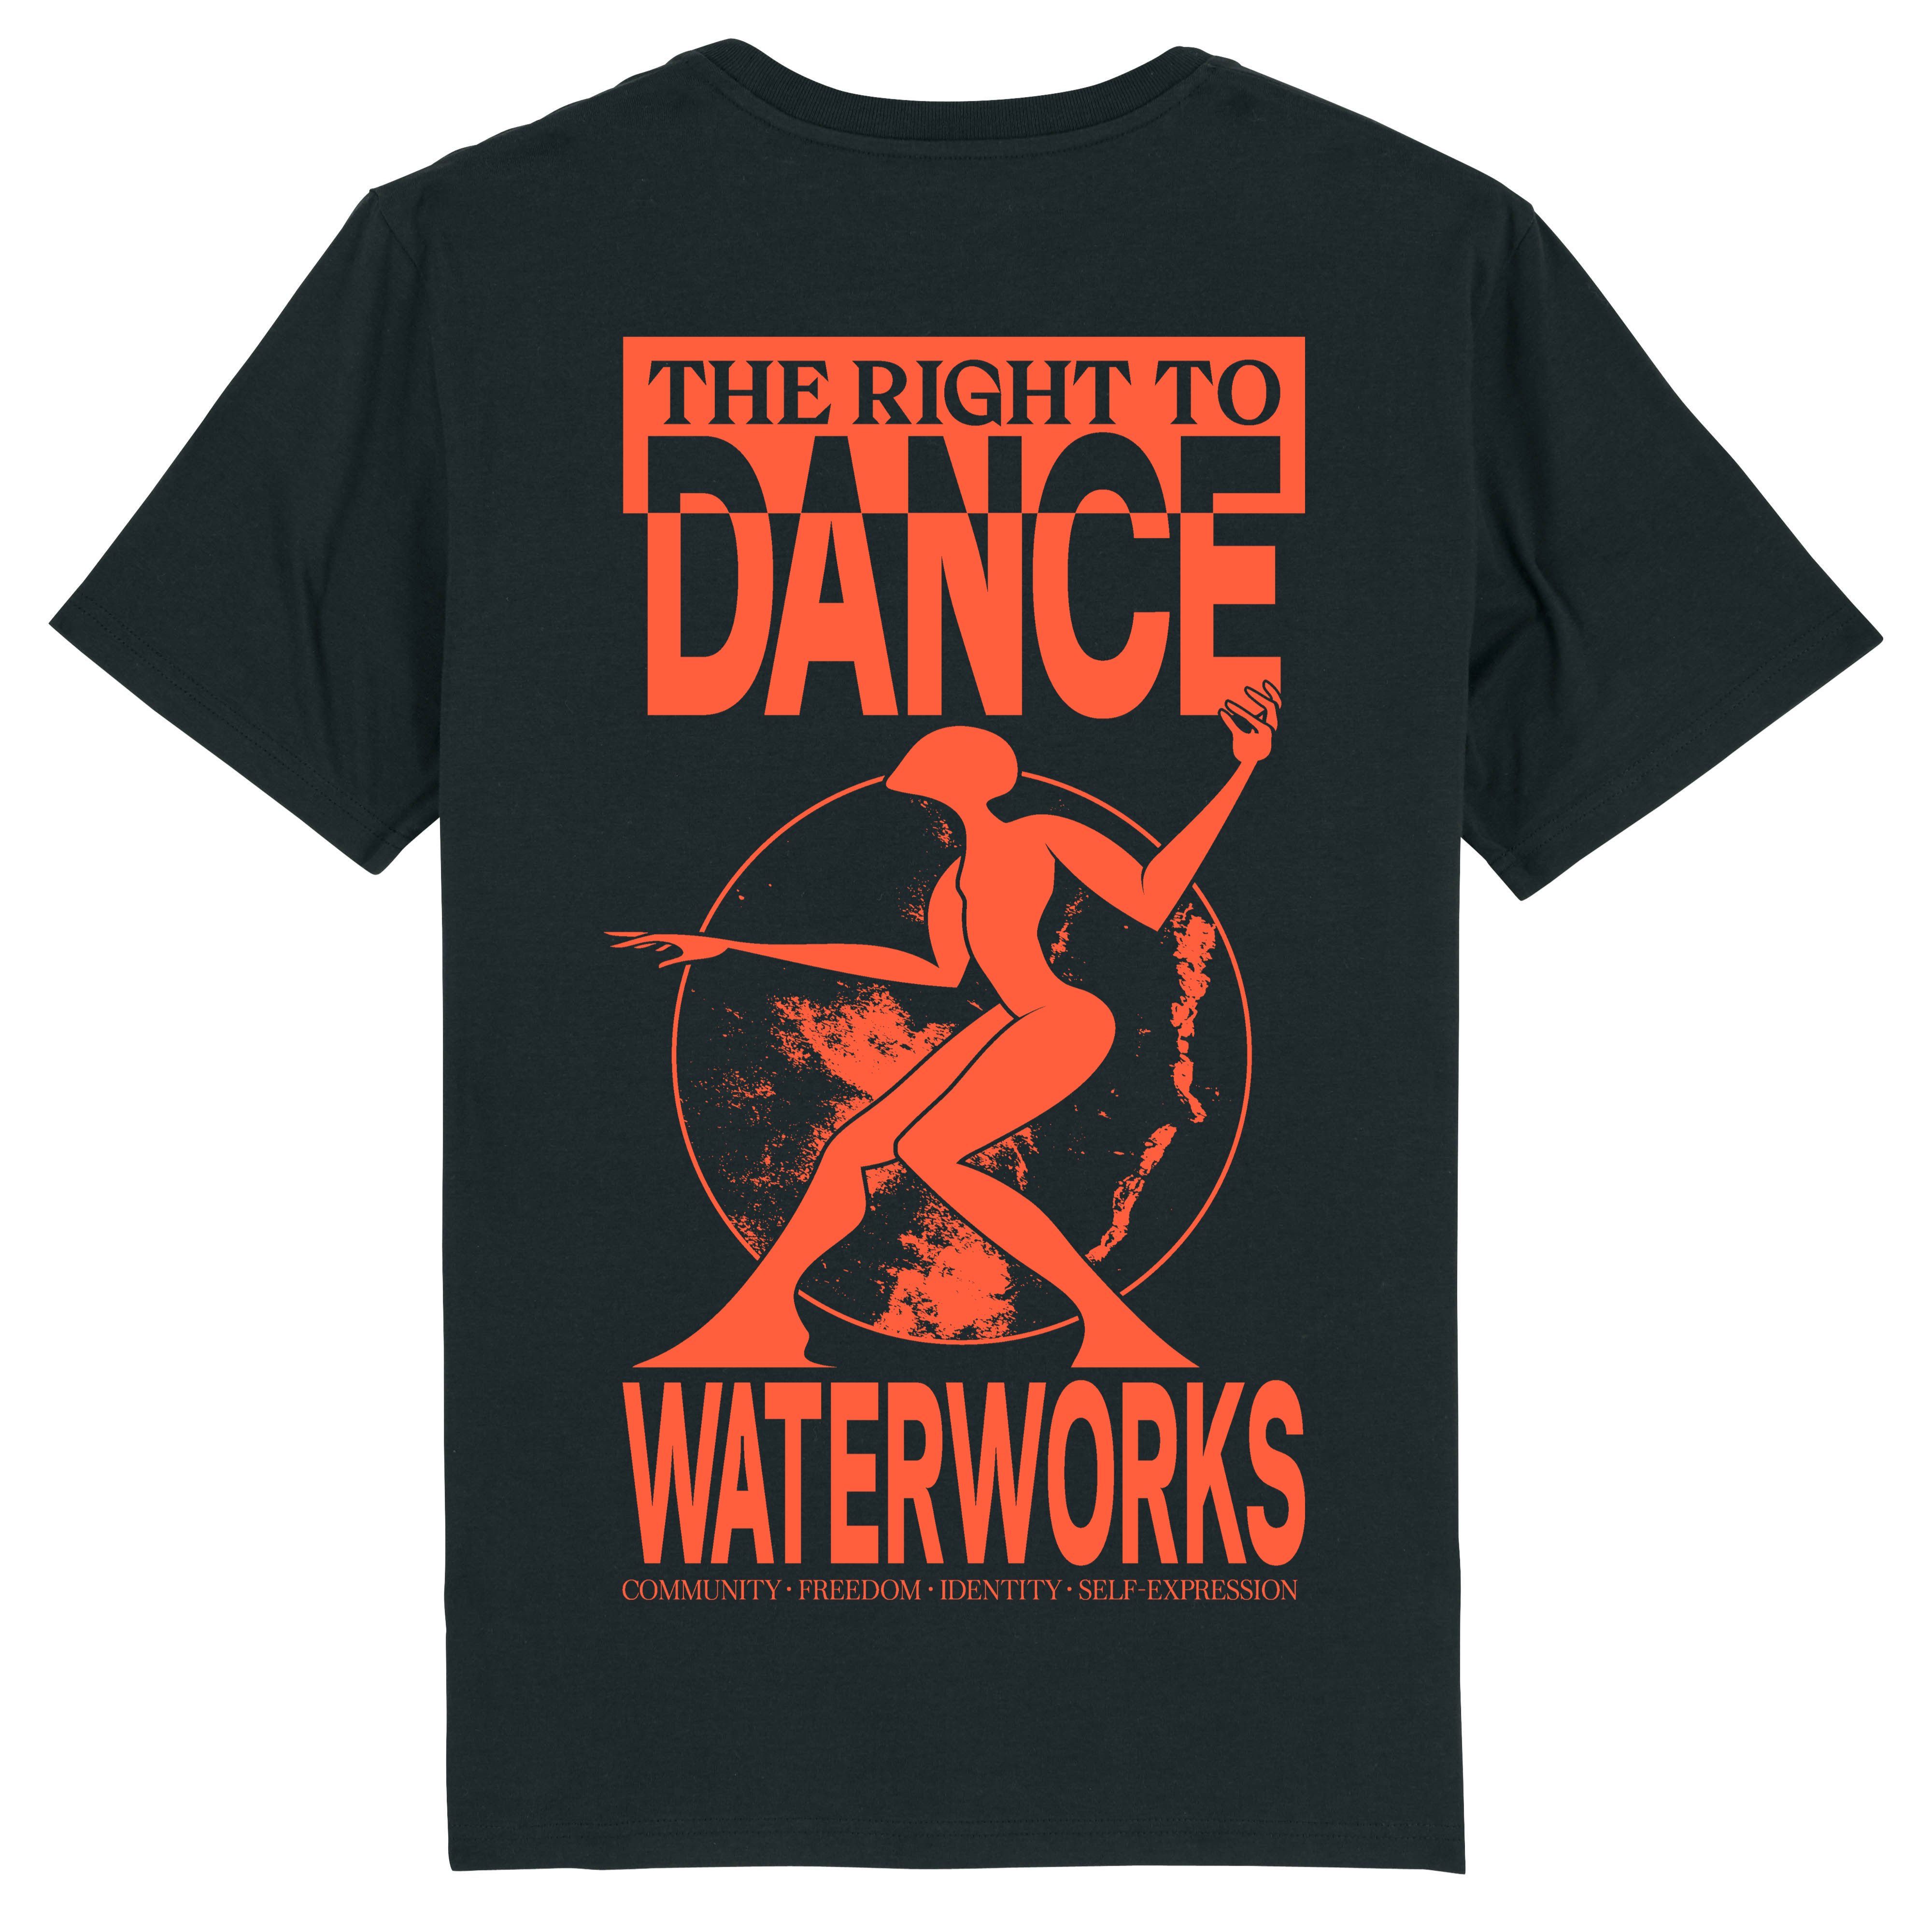 Black Waterworks t-shirt, front.